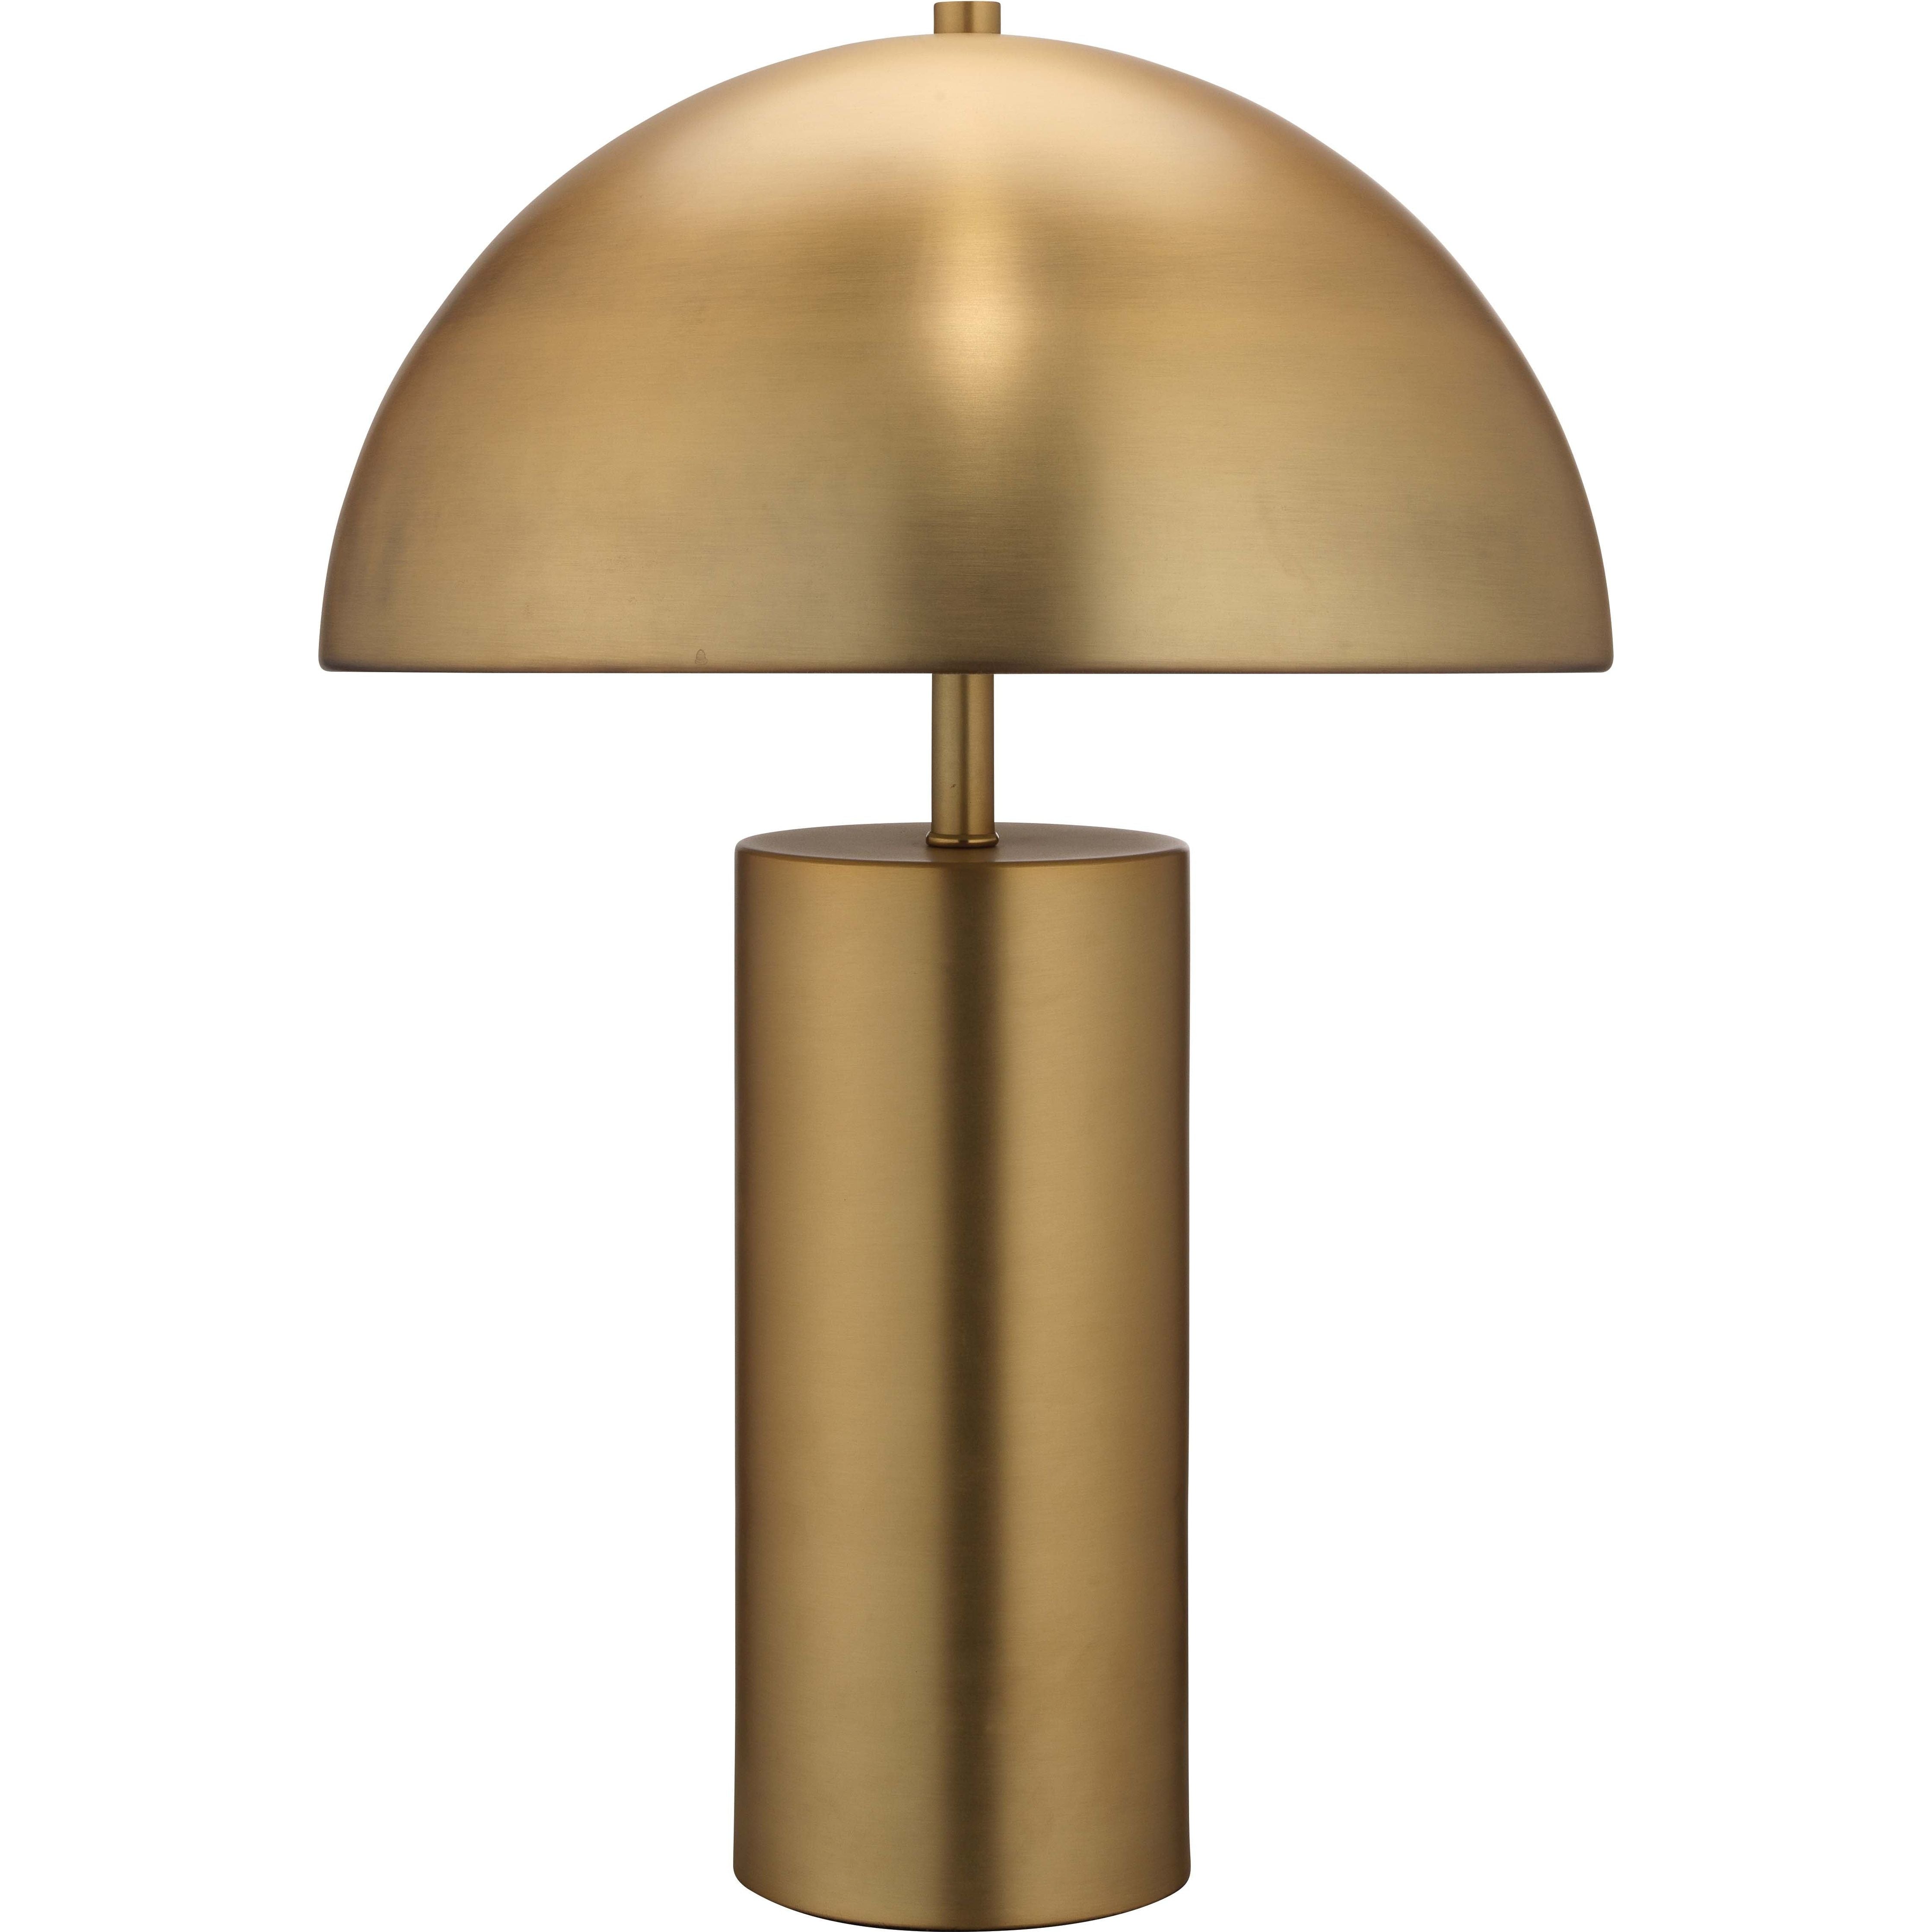 Jamie Young Company - LS9FELIXAB - Felix Table Lamp - Felix - Antique Brass Metal